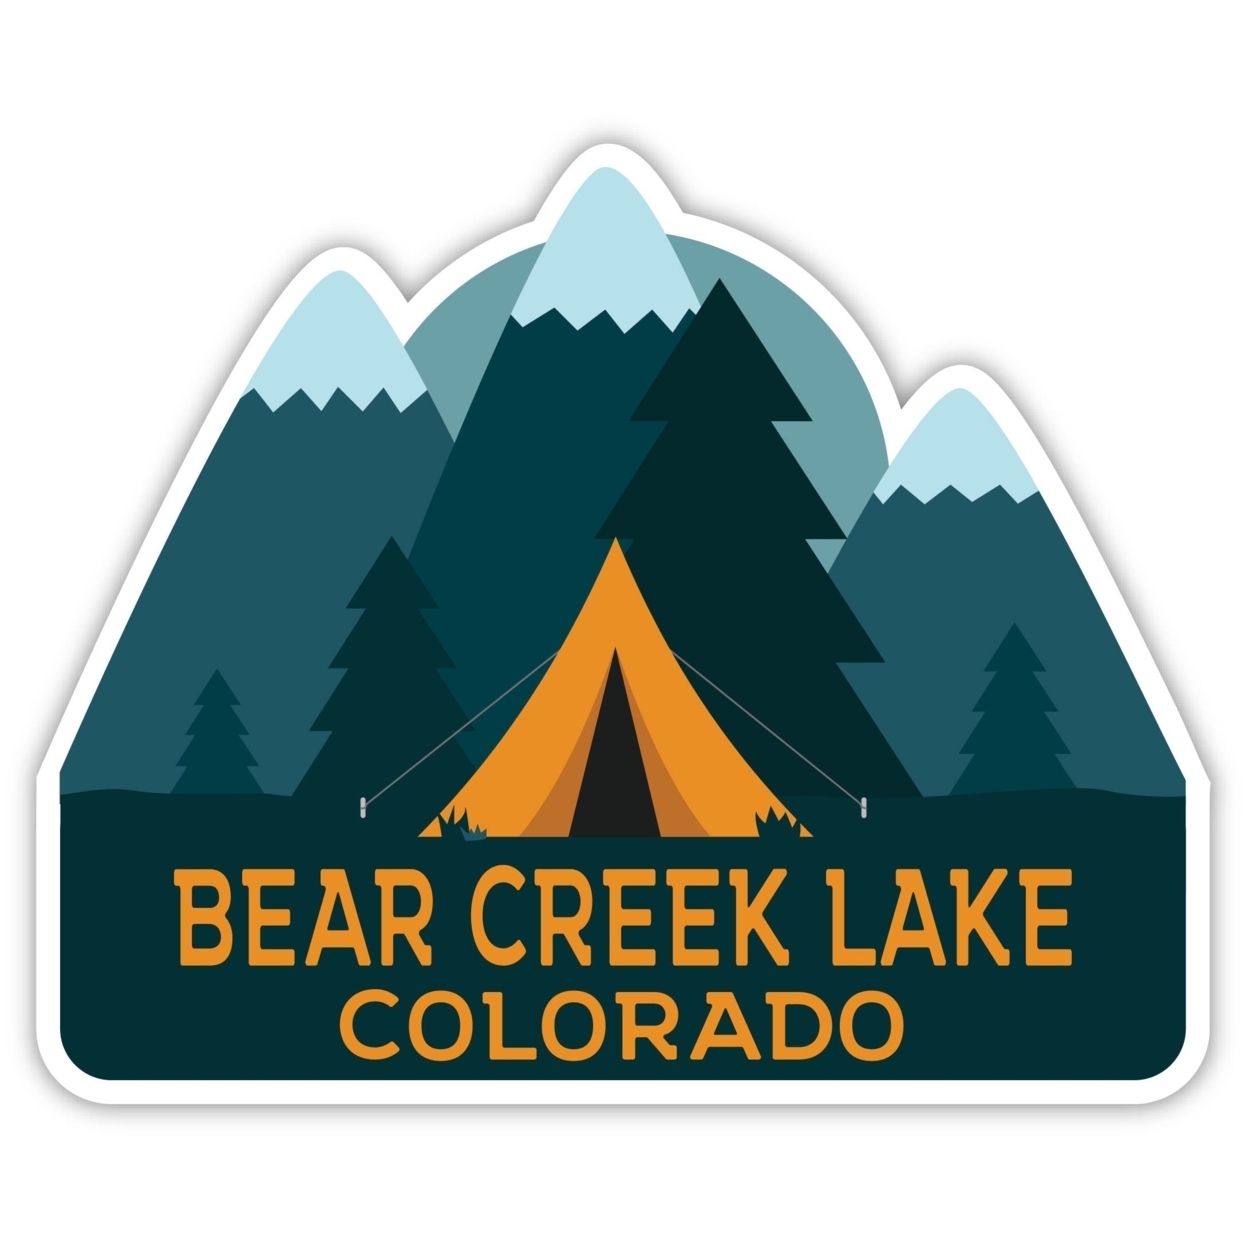 Bear Creek Lake Colorado Souvenir Decorative Stickers (Choose Theme And Size) - 4-Pack, 12-Inch, Tent